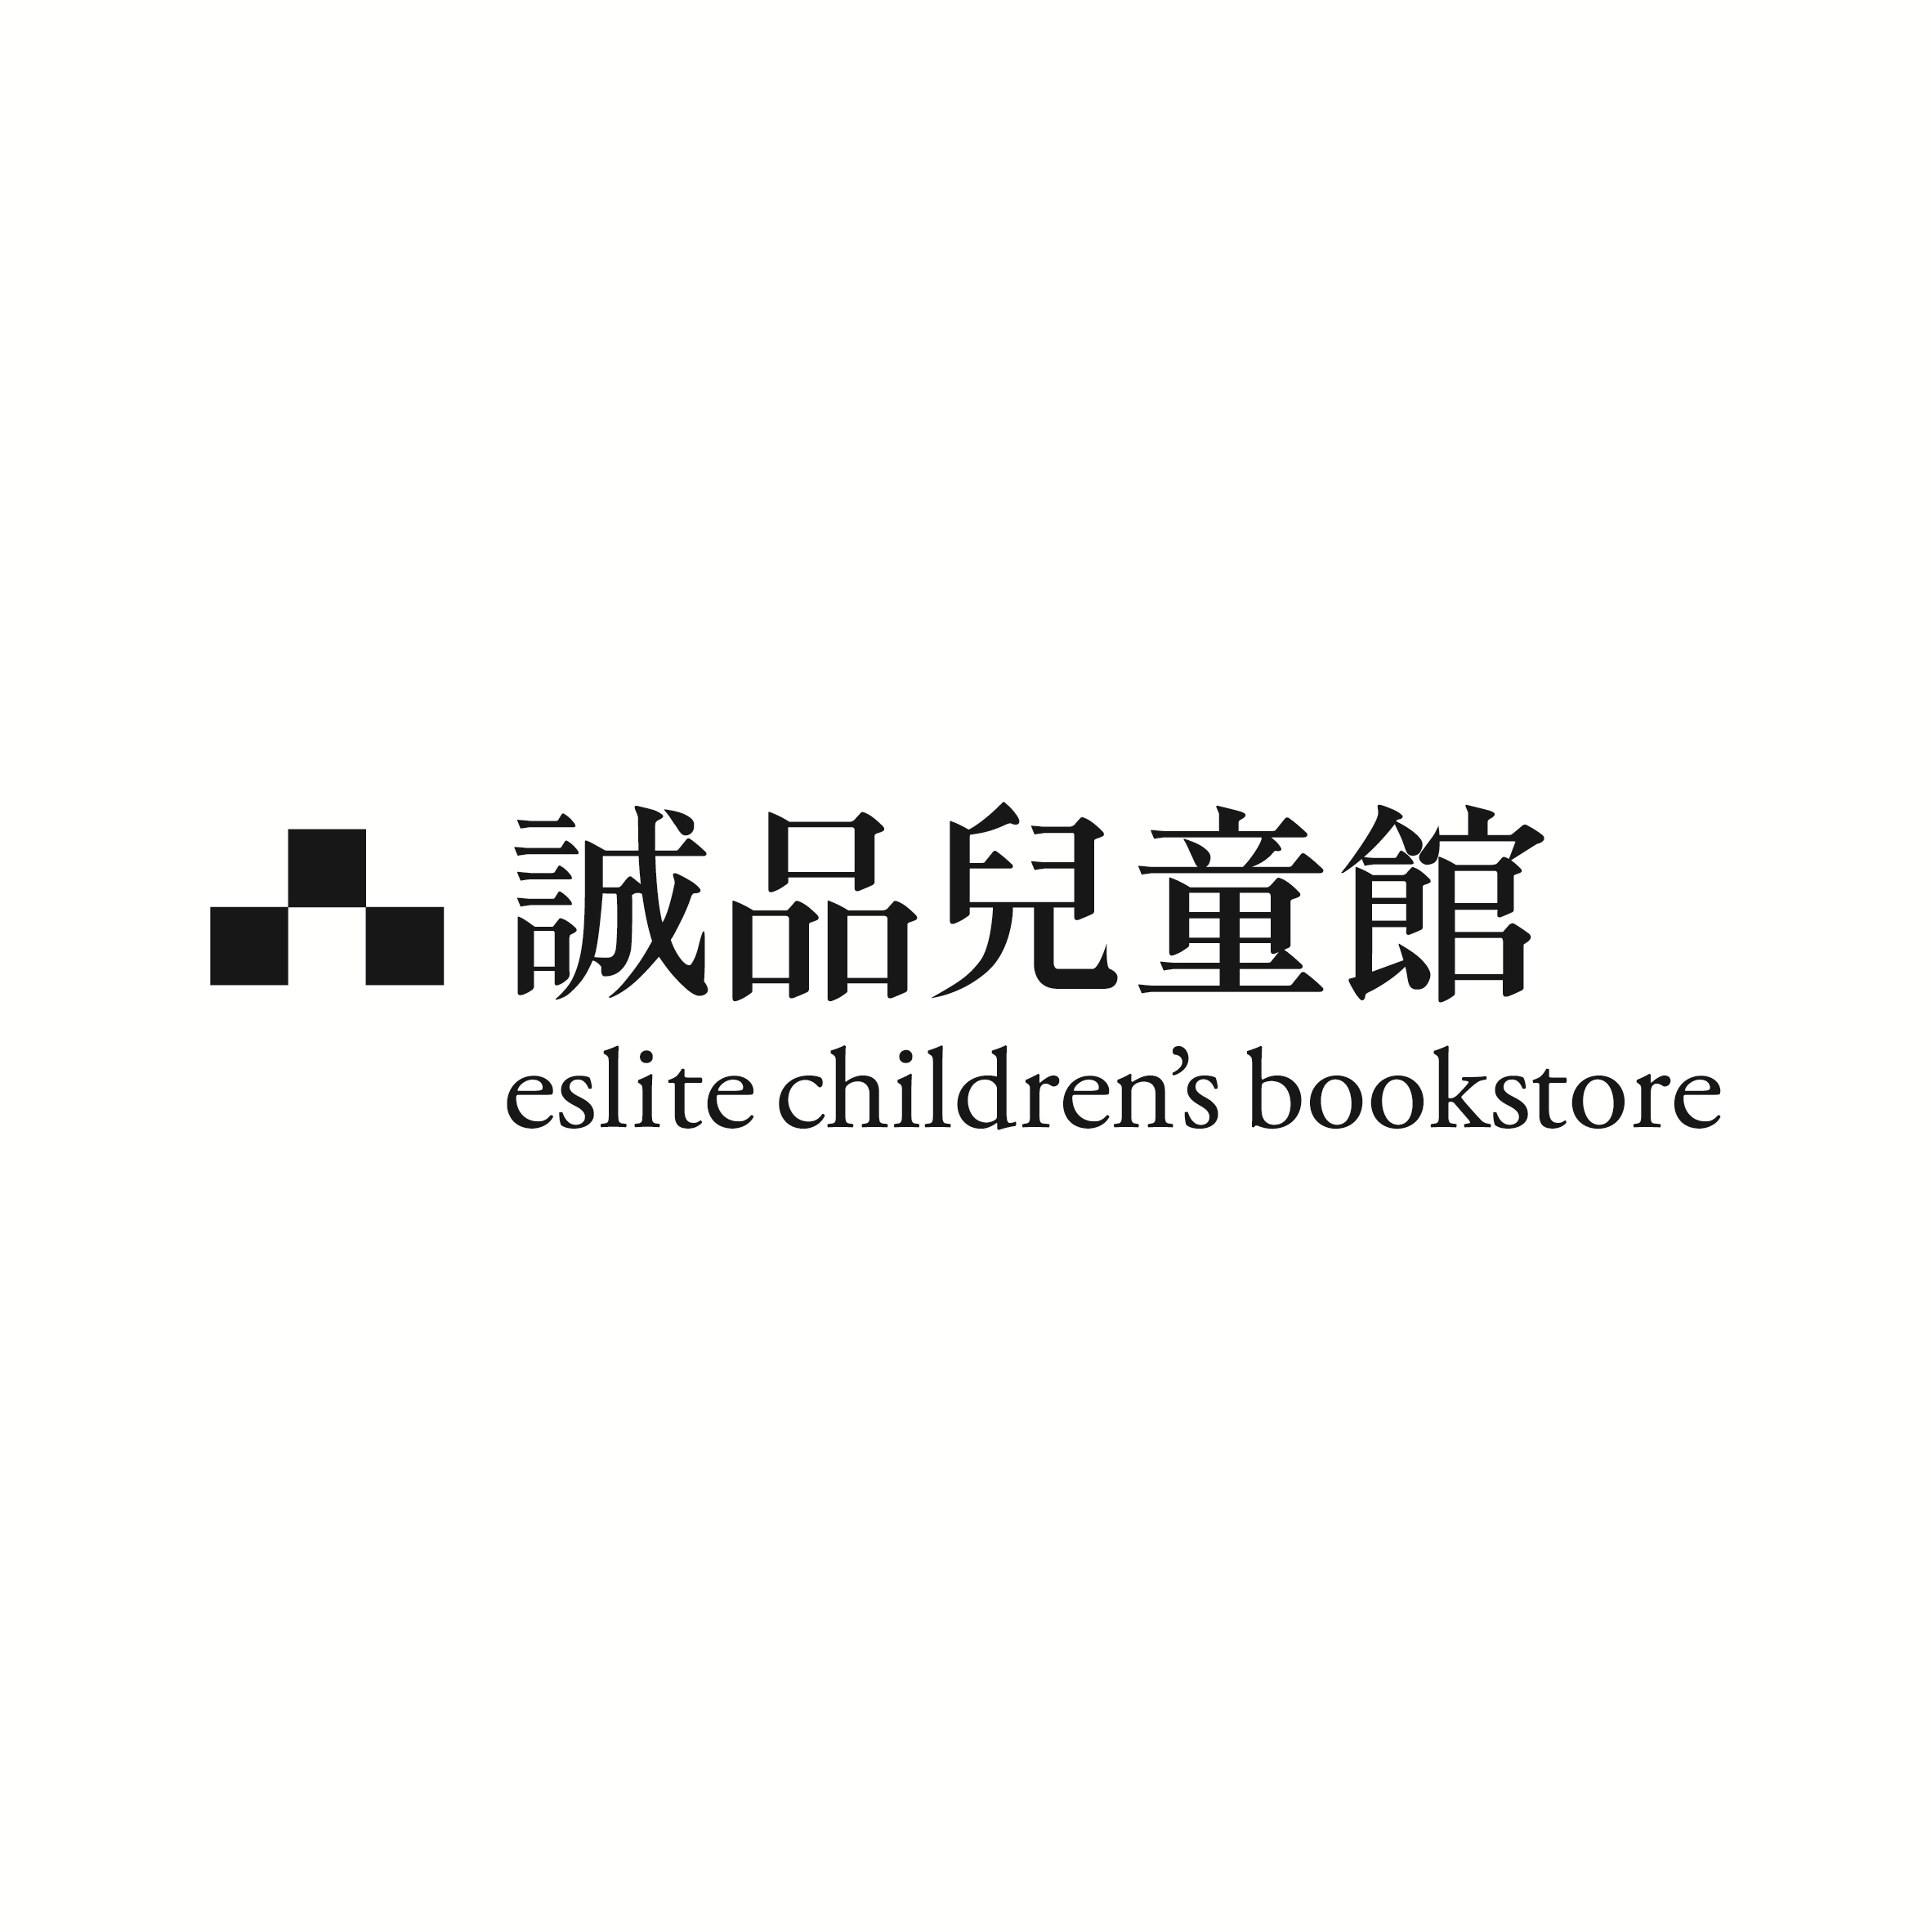 eslite children's bookstore 誠品兒童館